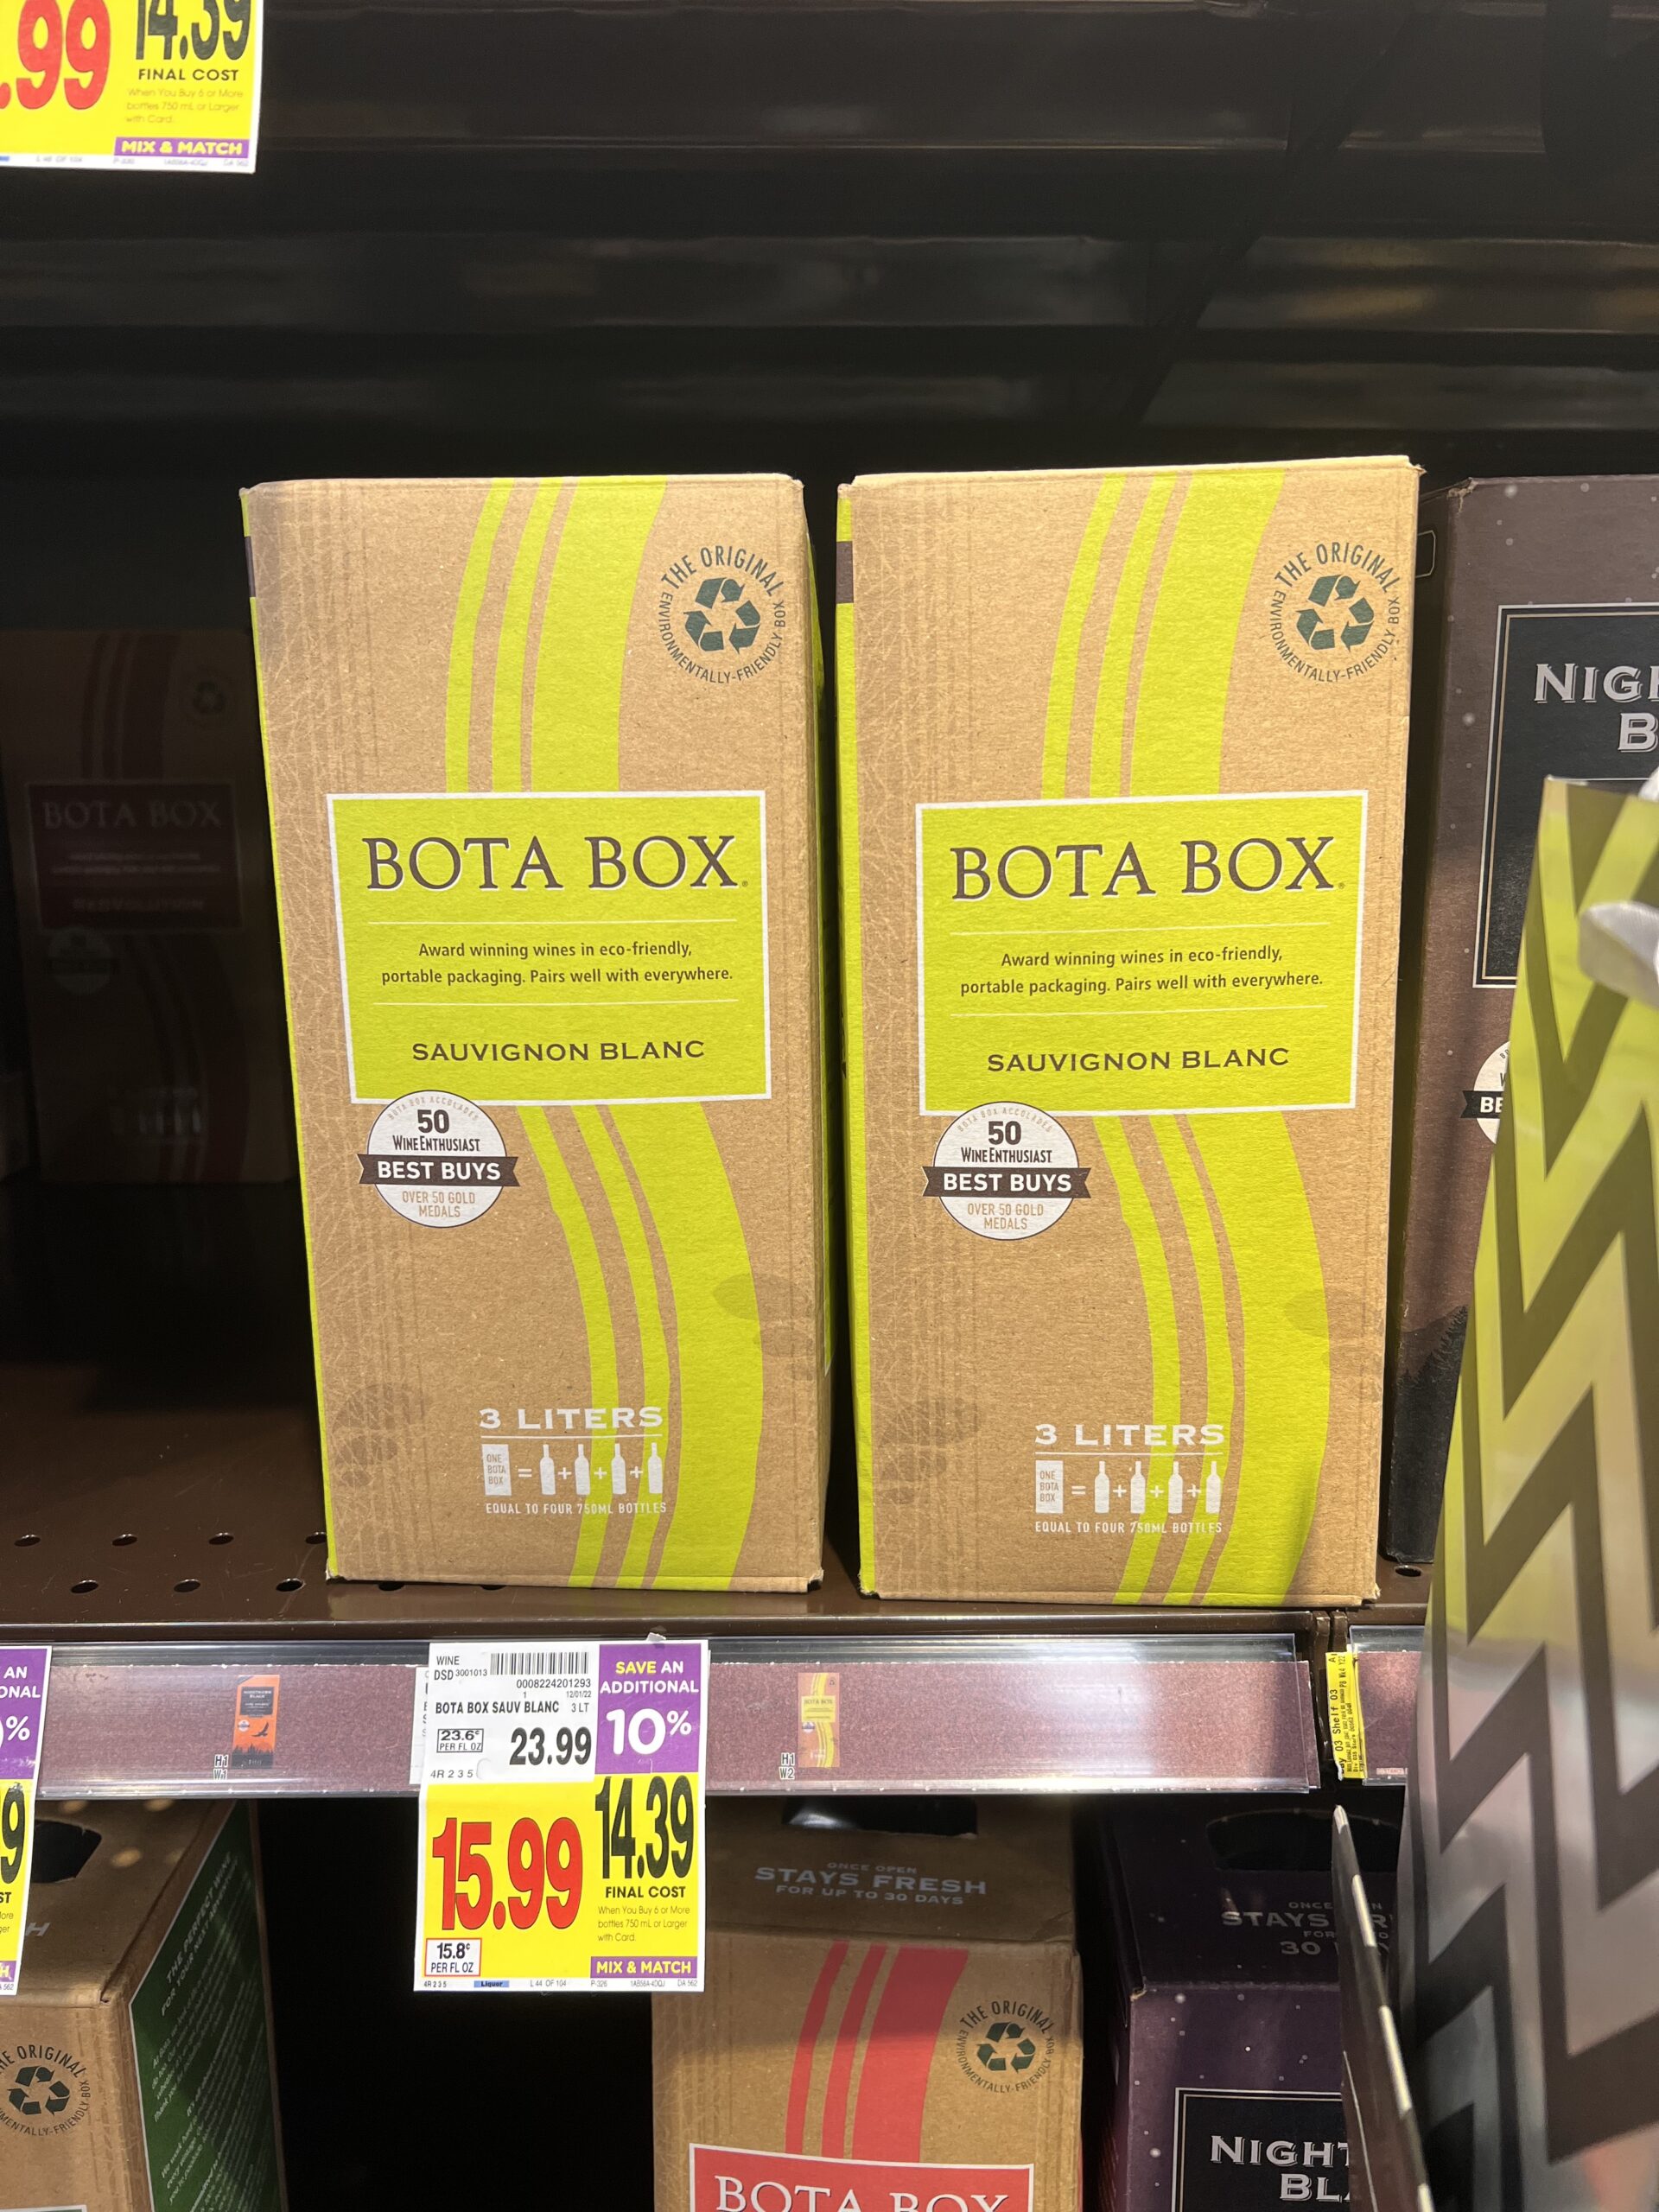 bota box wine kroger shelf image 6